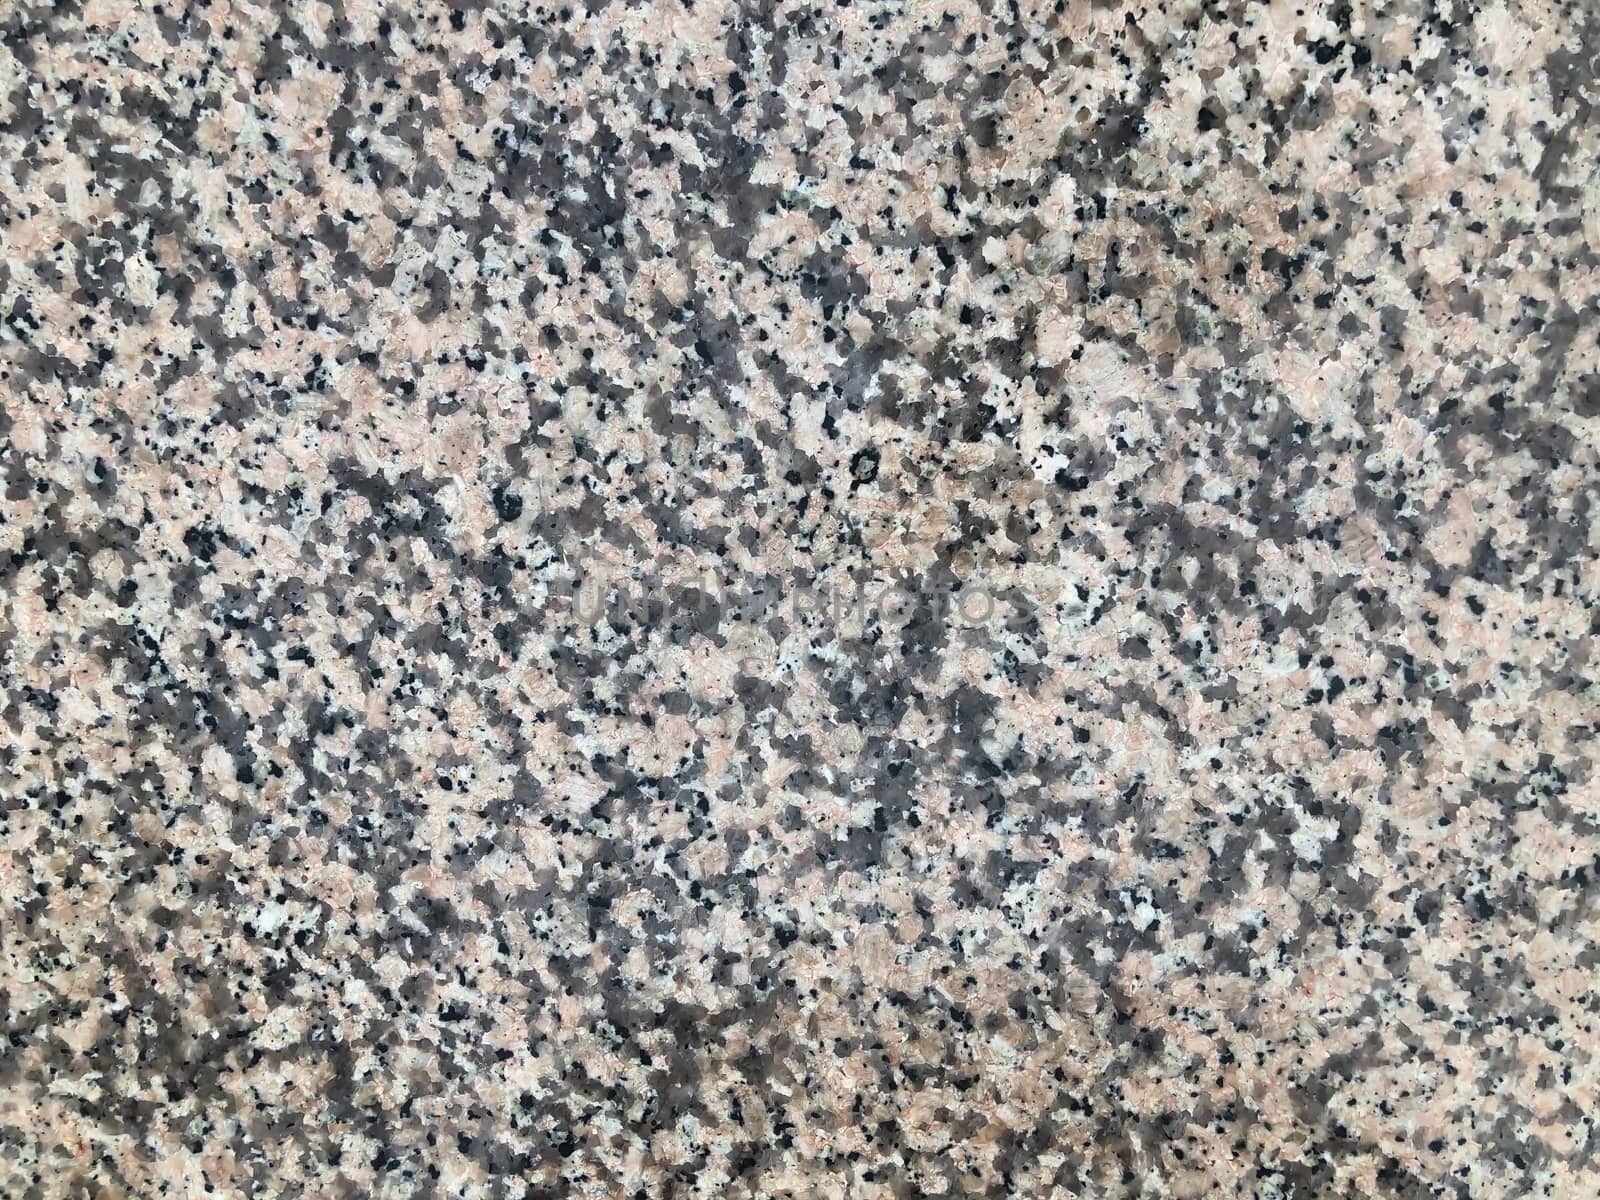 Matte gray granite stone texture background